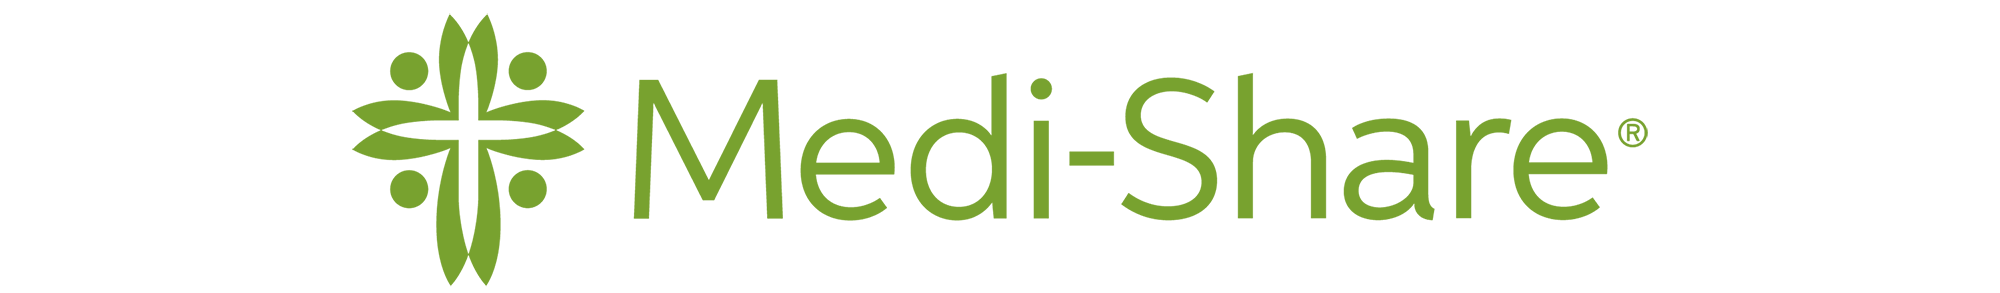 Medi-Share Logo - Green_NT-01_A